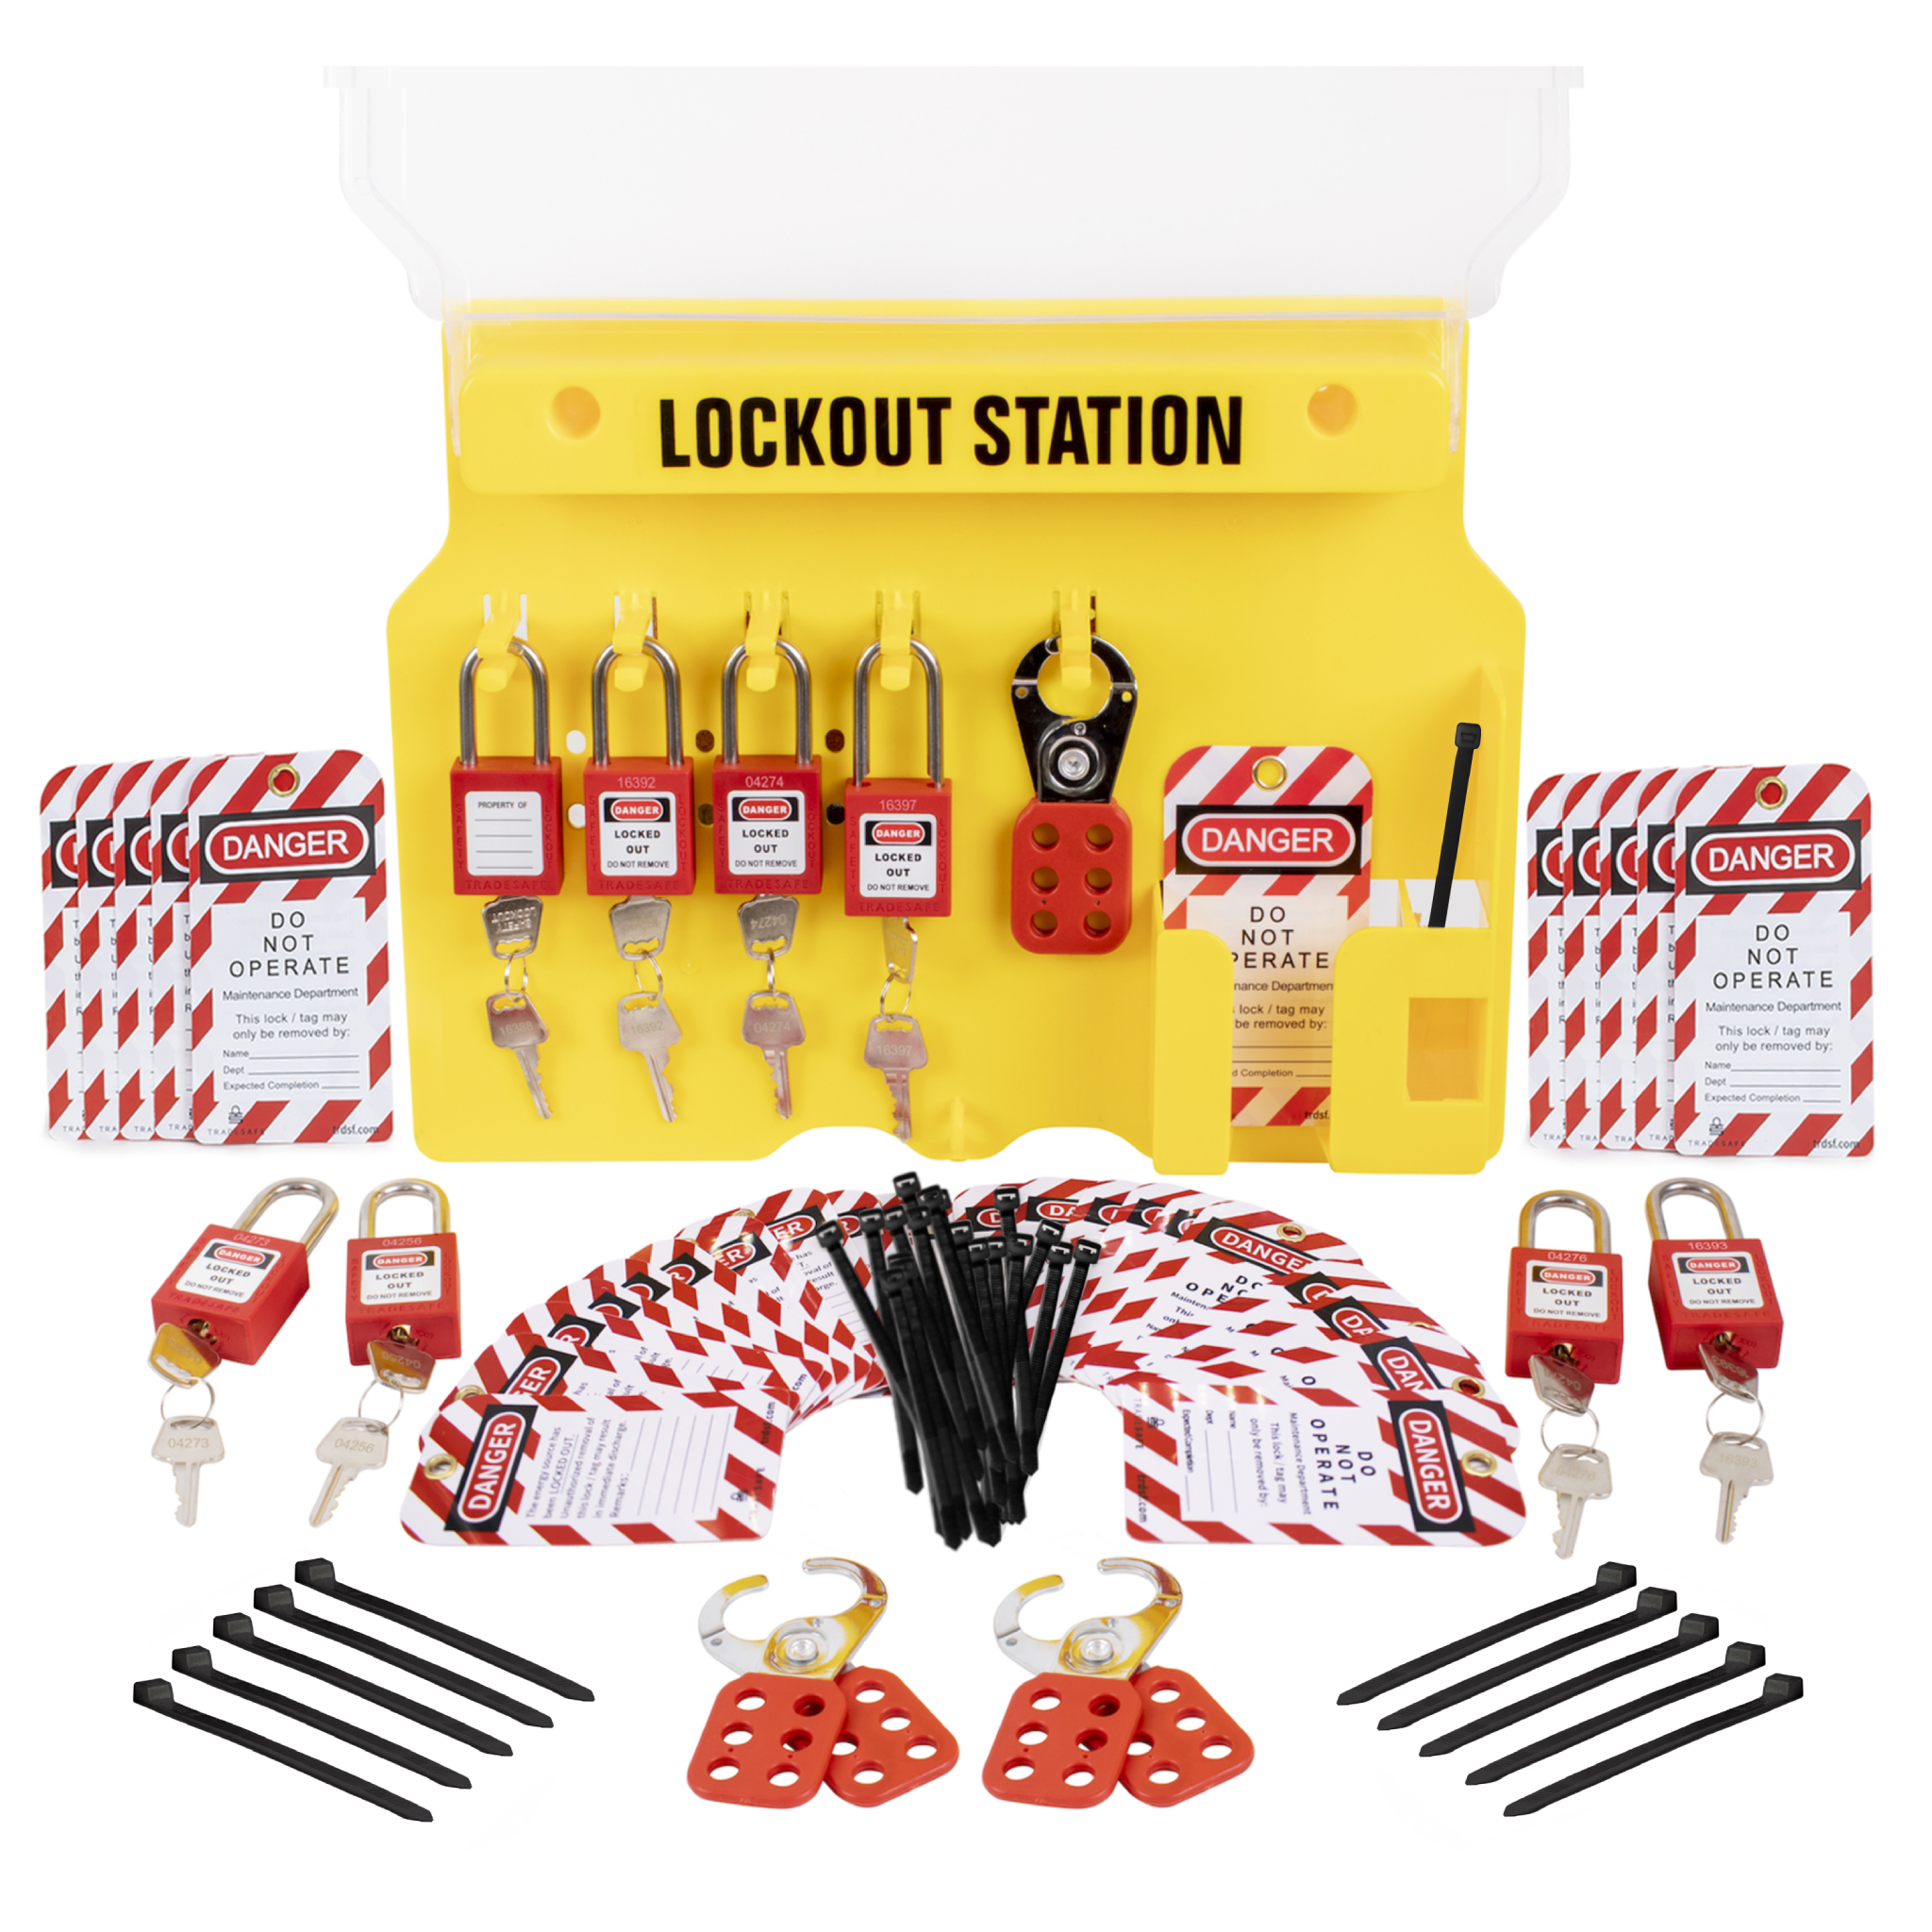 Lockout Tagout Station – Large